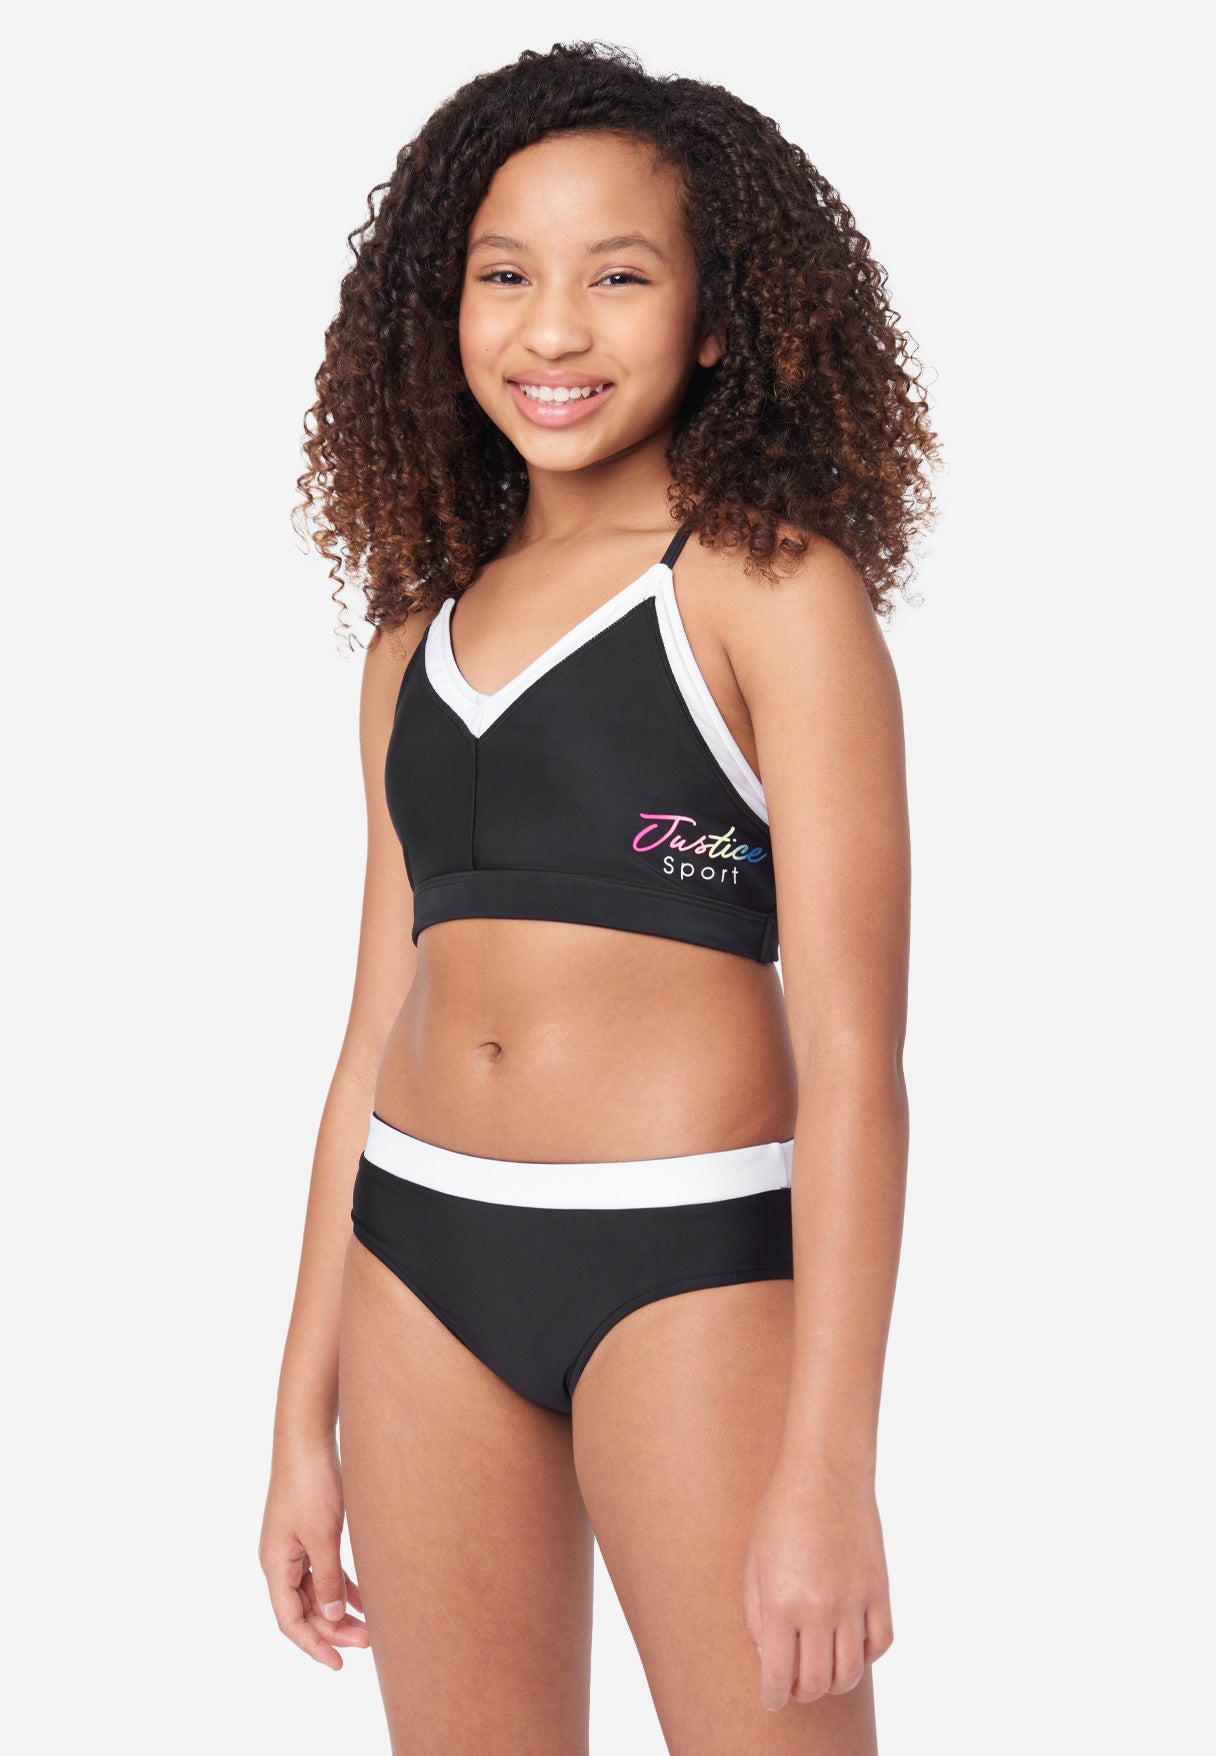 Justice J Sport Reversible Color Block Girl's Bikini Swim Set in Black, Size M Plusus (10 Plus)